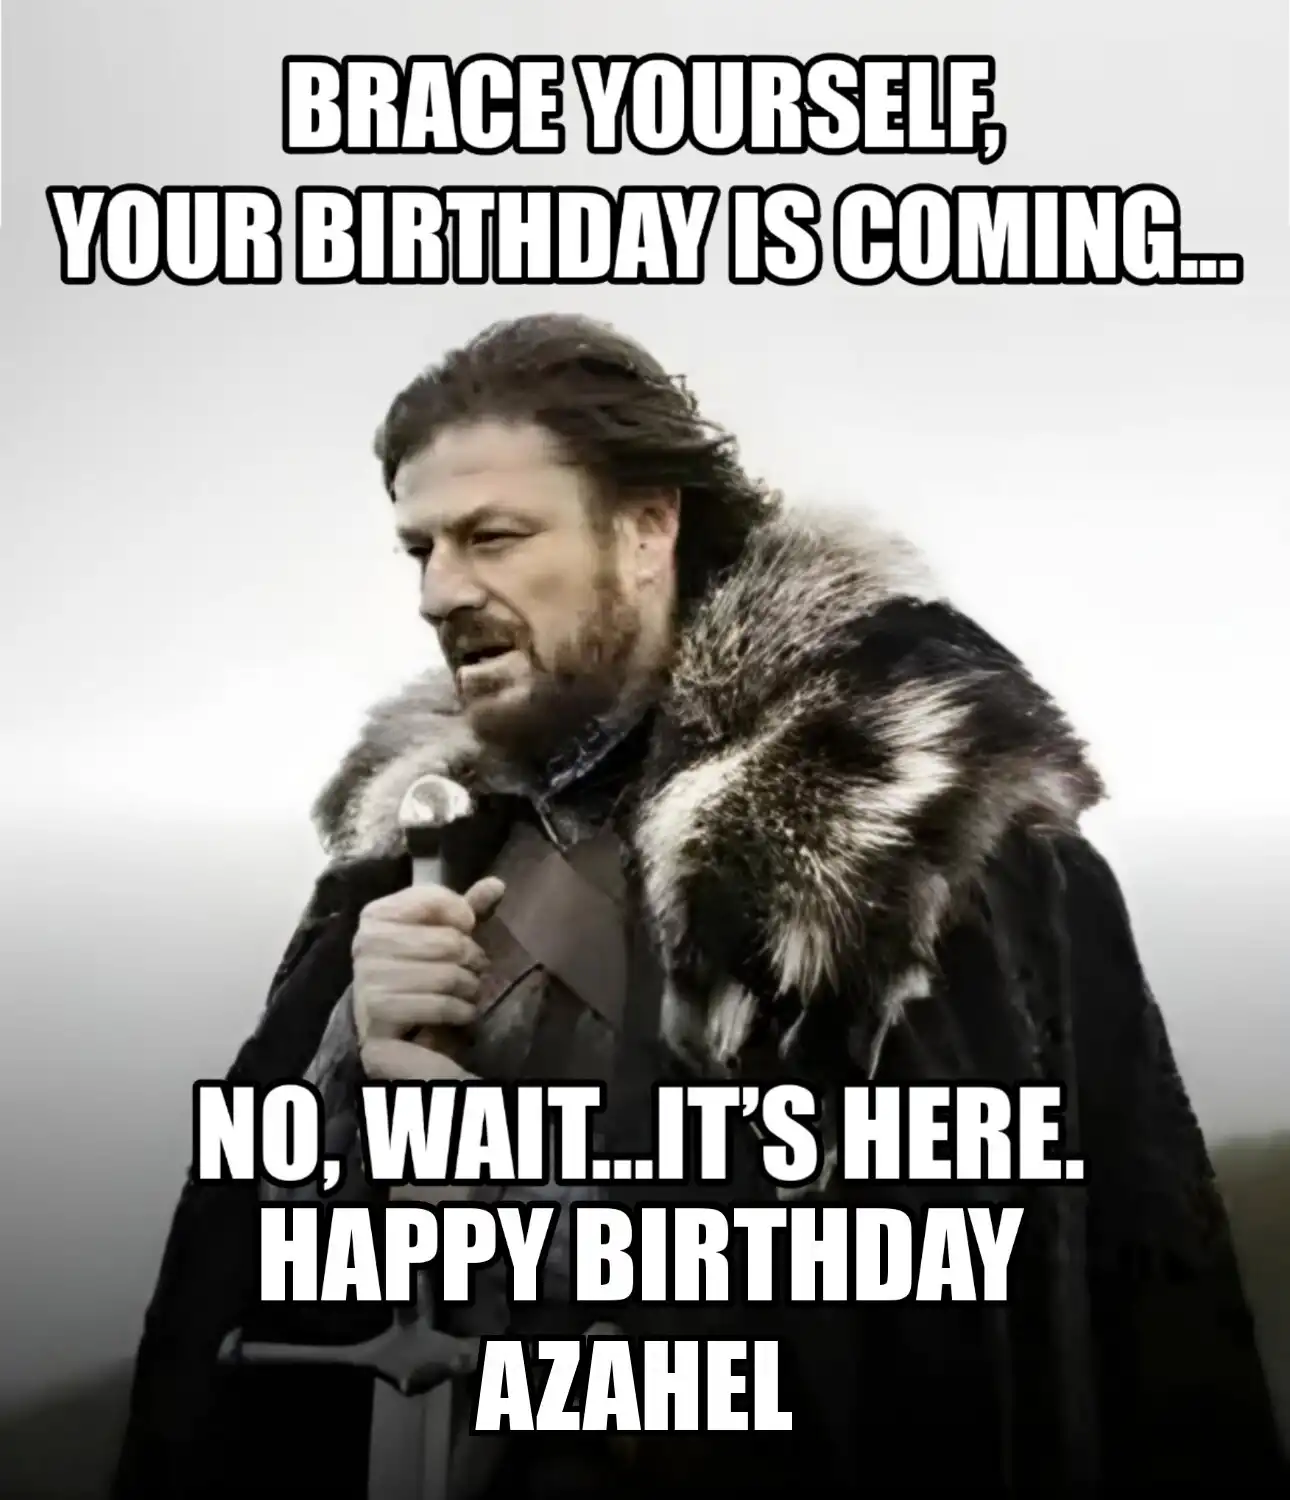 Happy Birthday Azahel Brace Yourself Your Birthday Is Coming Meme